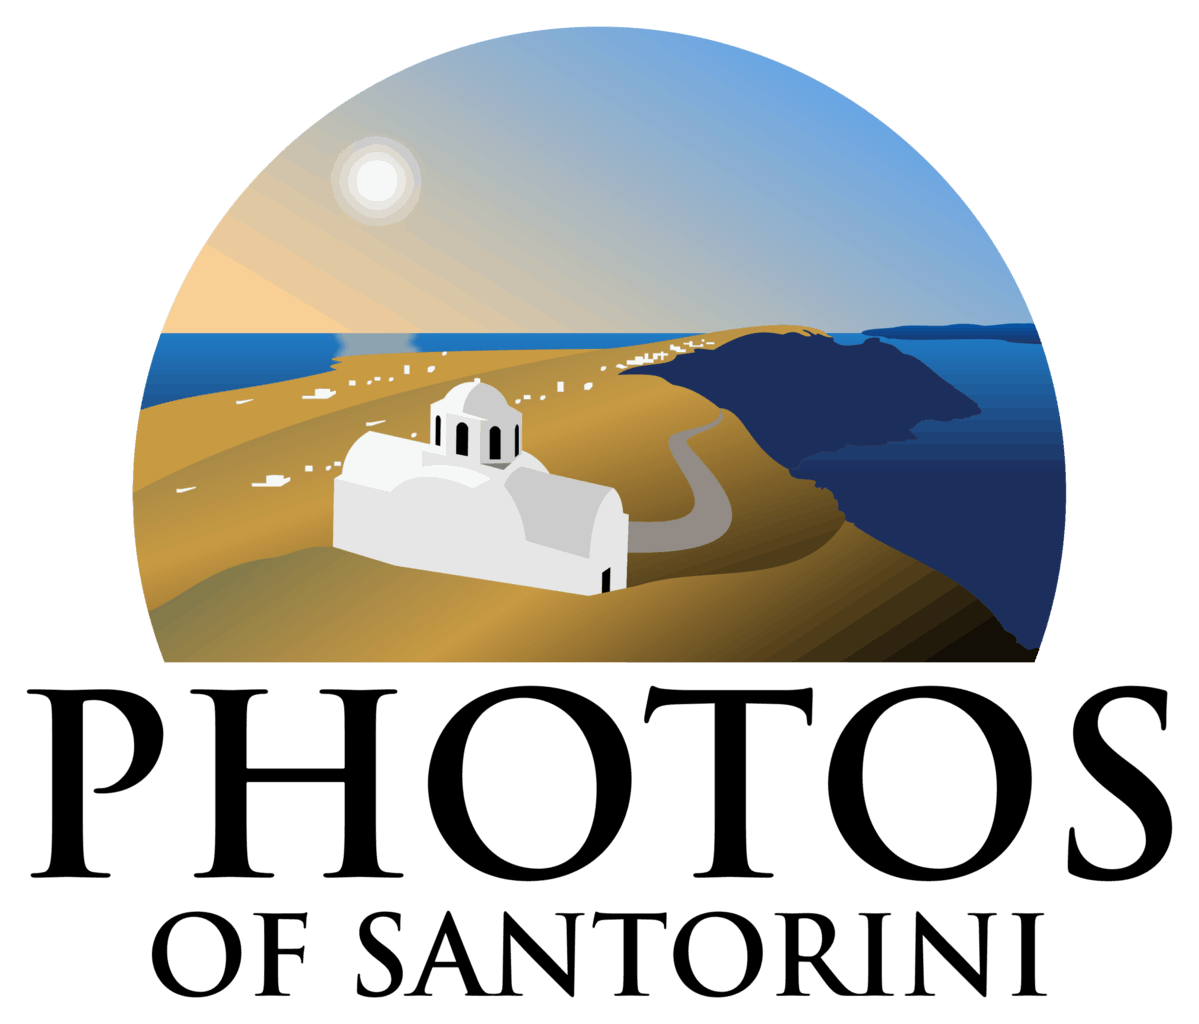  Travel Photography Website Photos of Santorini by Rick McEvoy 